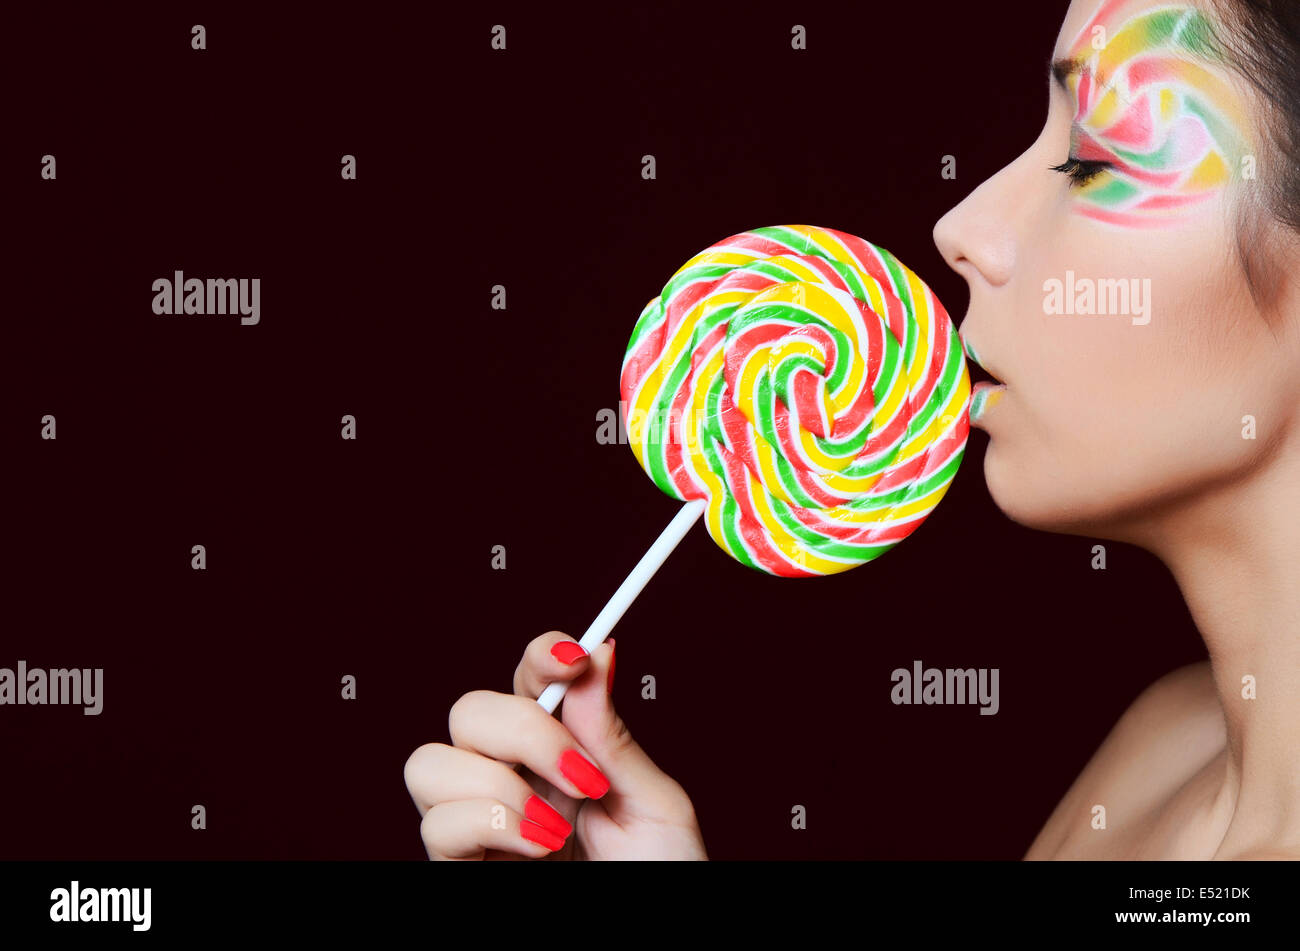 Girl Tongue Candy Stock Photos & Girl Tongue Candy Stock Images - Alamy